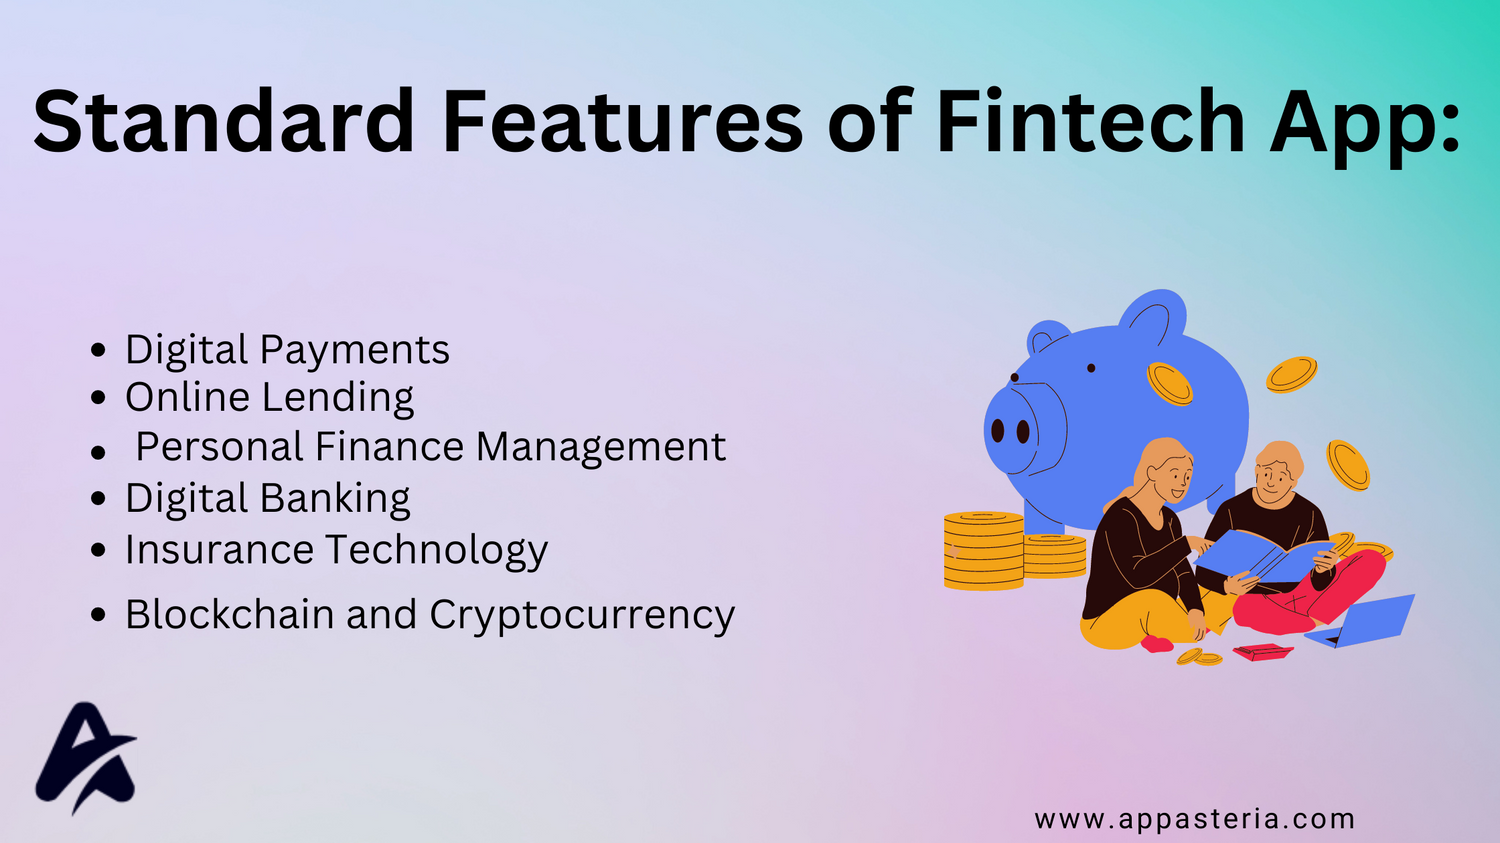 Features of Fintech Apps